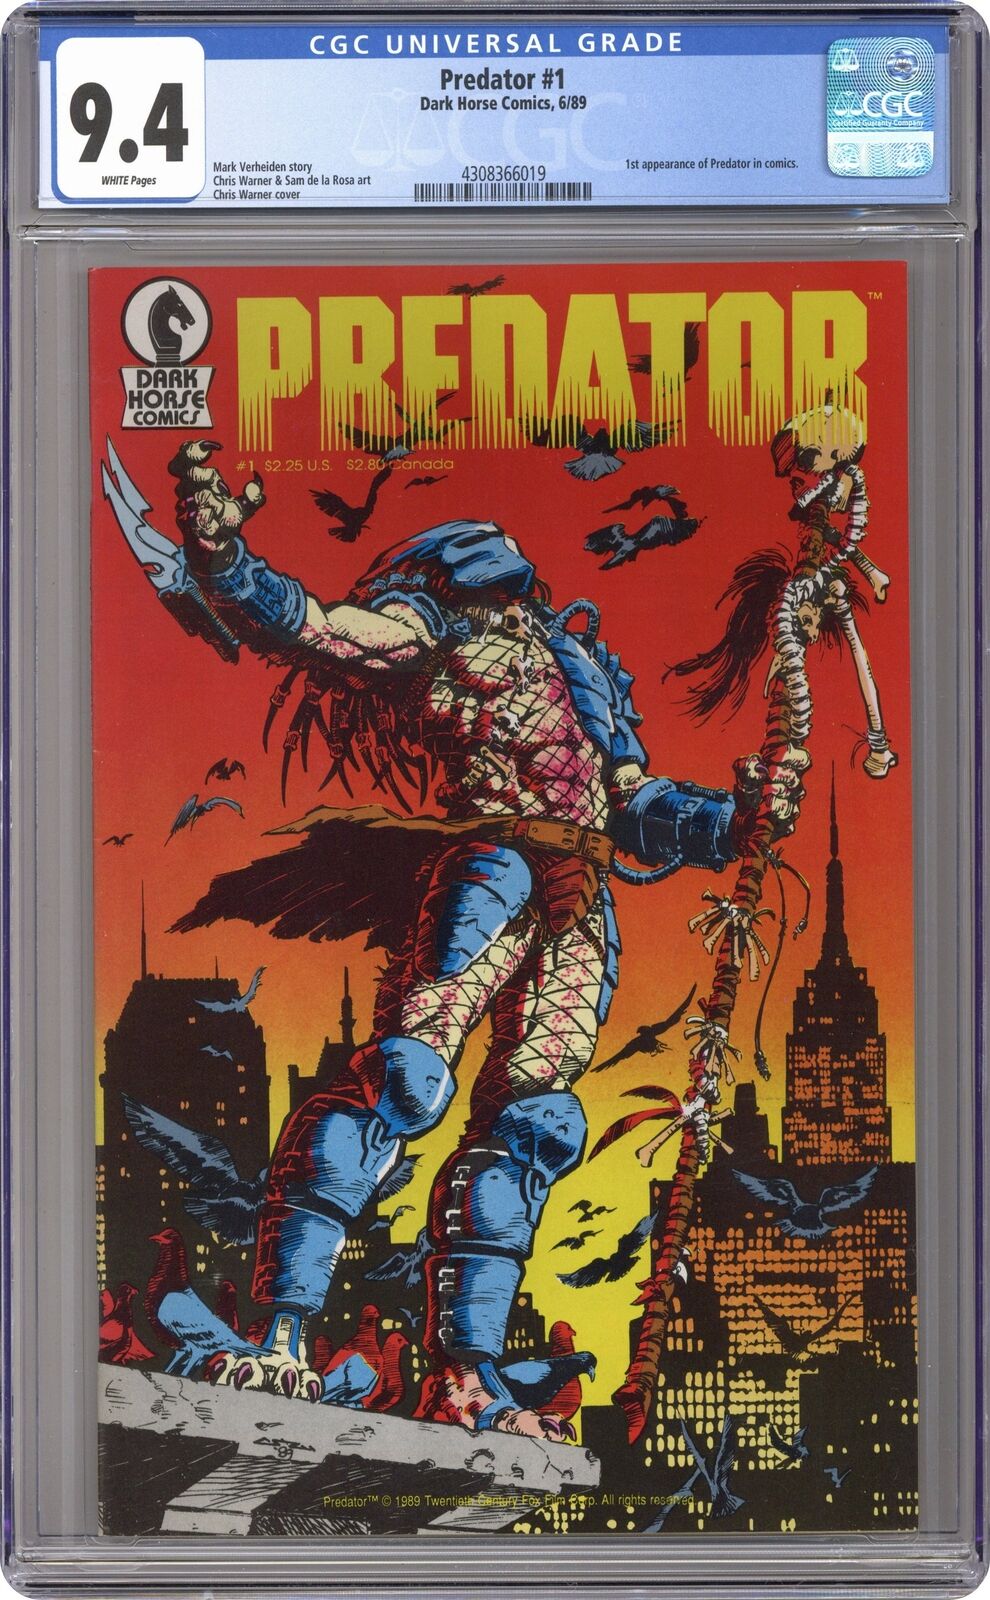 Predator #1 1st Printing CGC 9.4 1989 4308366019 1st app. Predator in comics